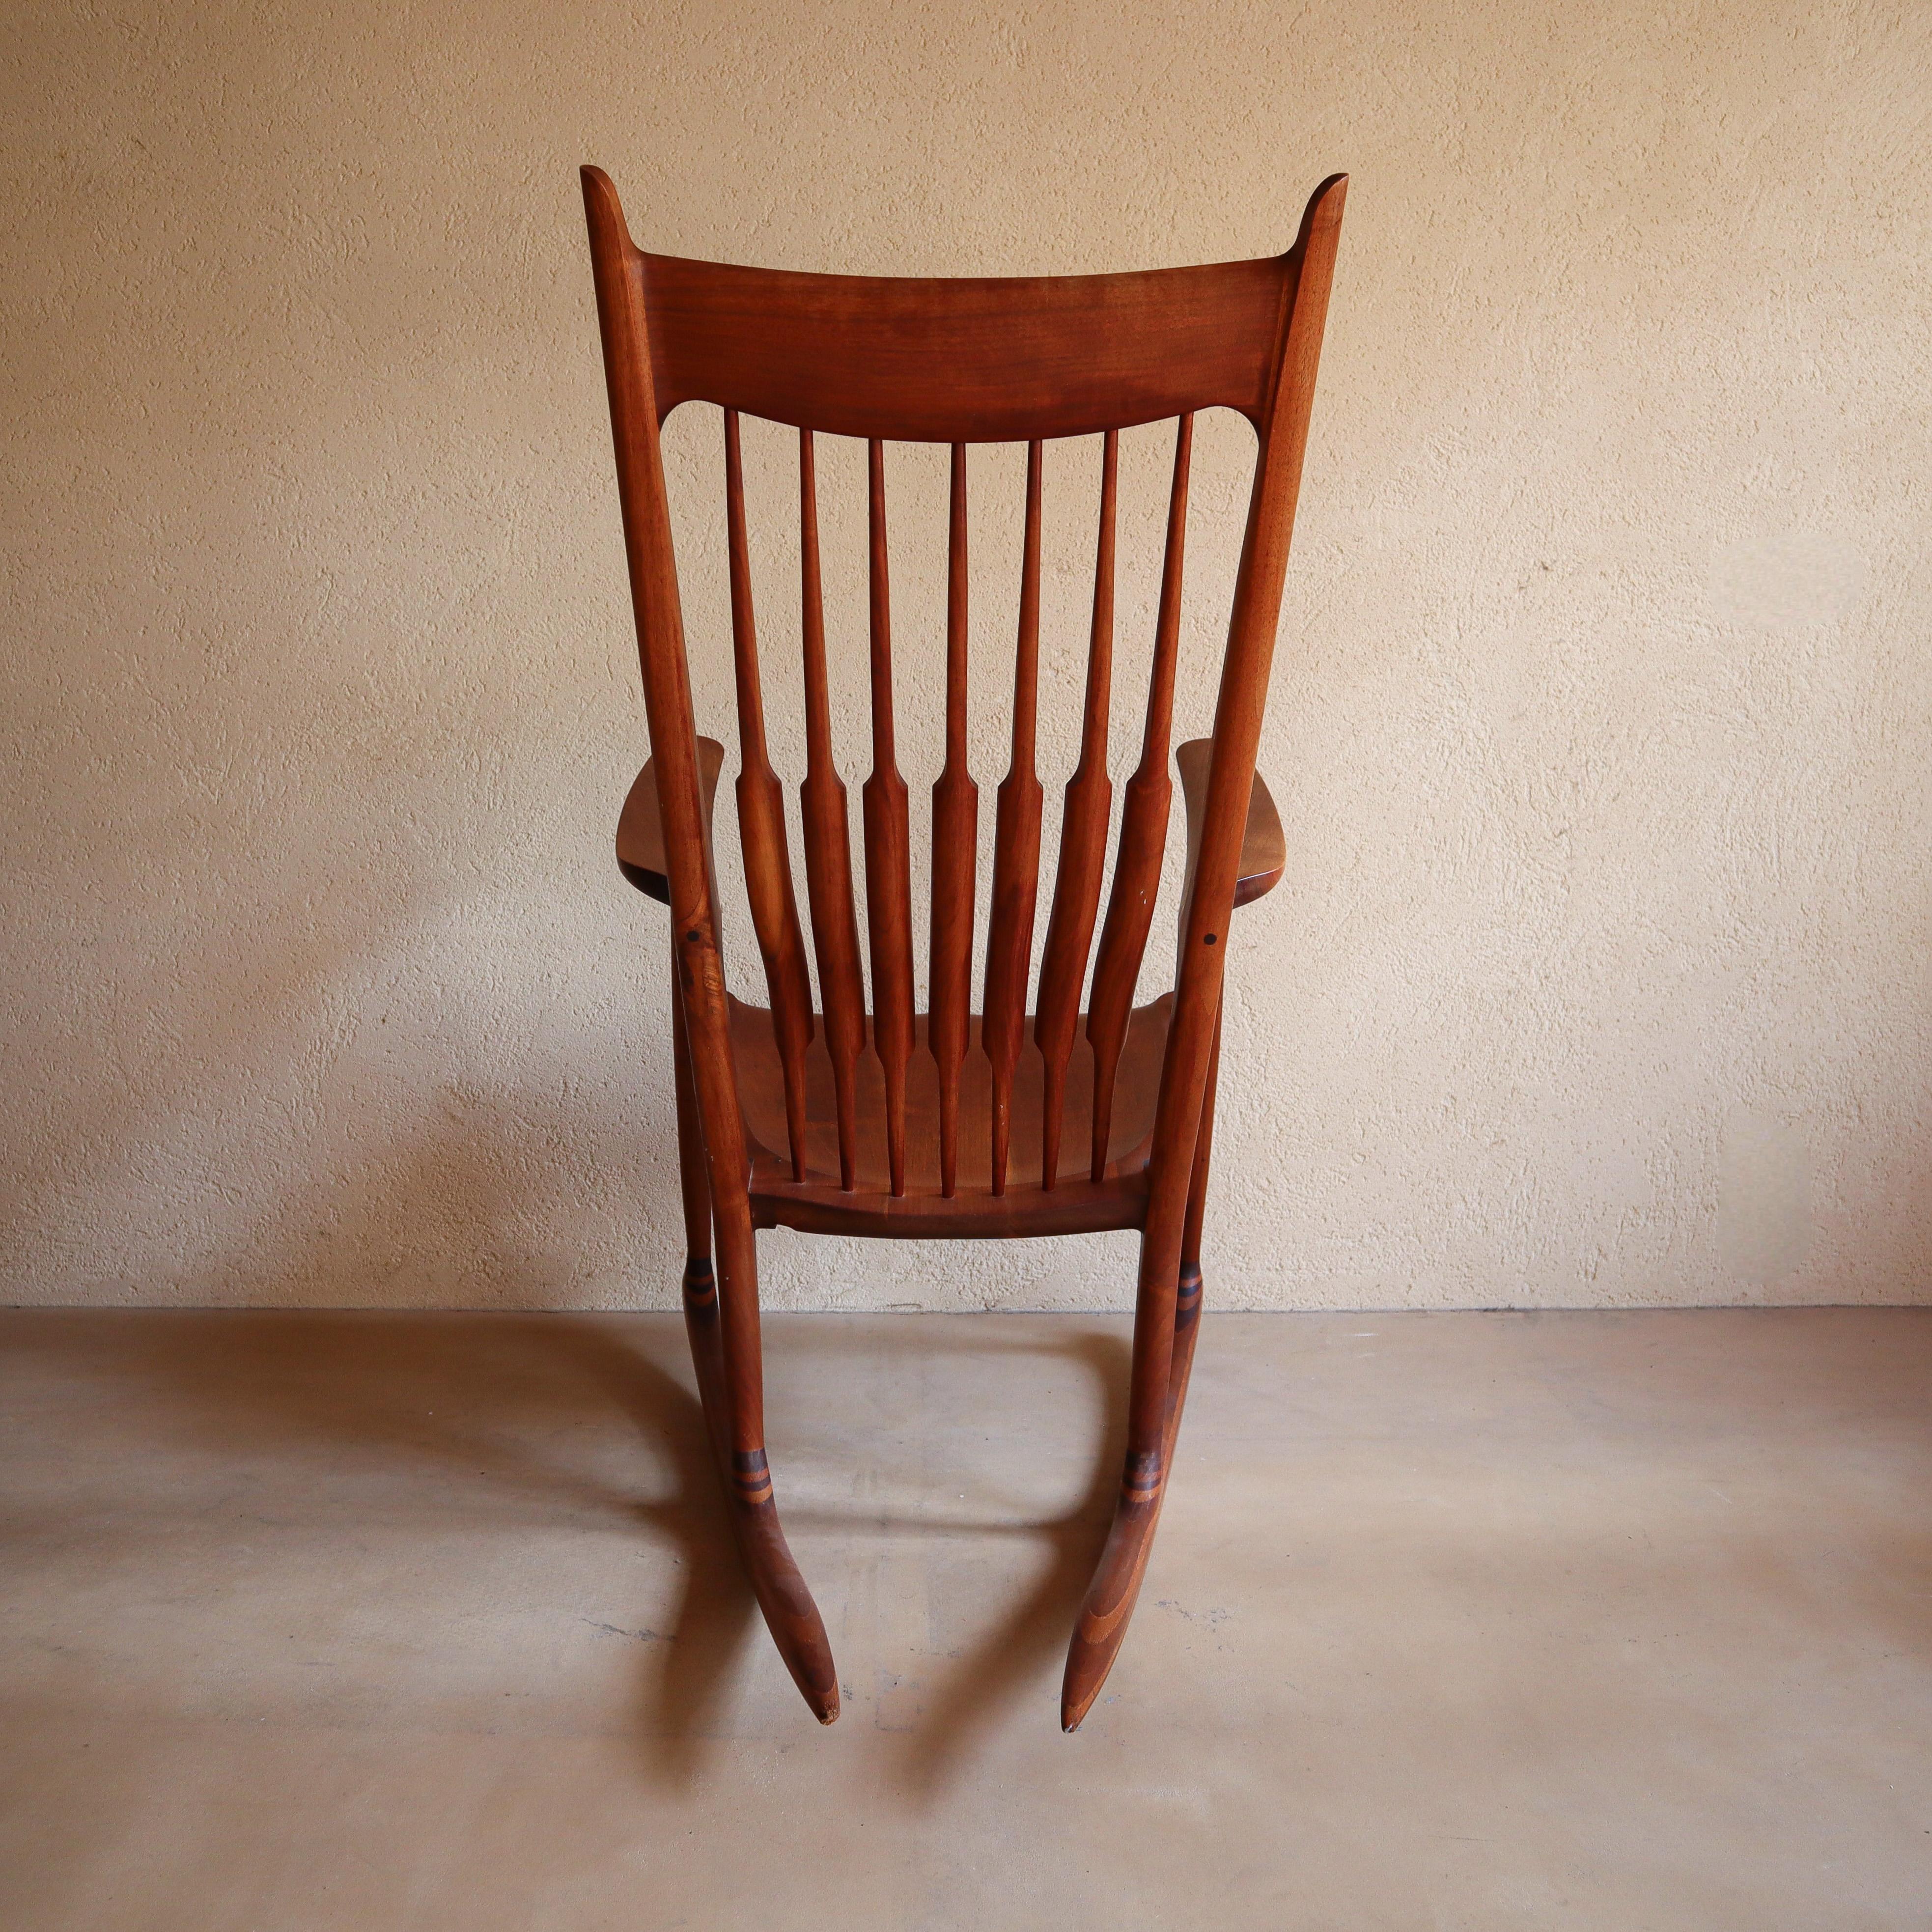 Japanese Sam Maloof Style Solid Walnut Rocking Chair